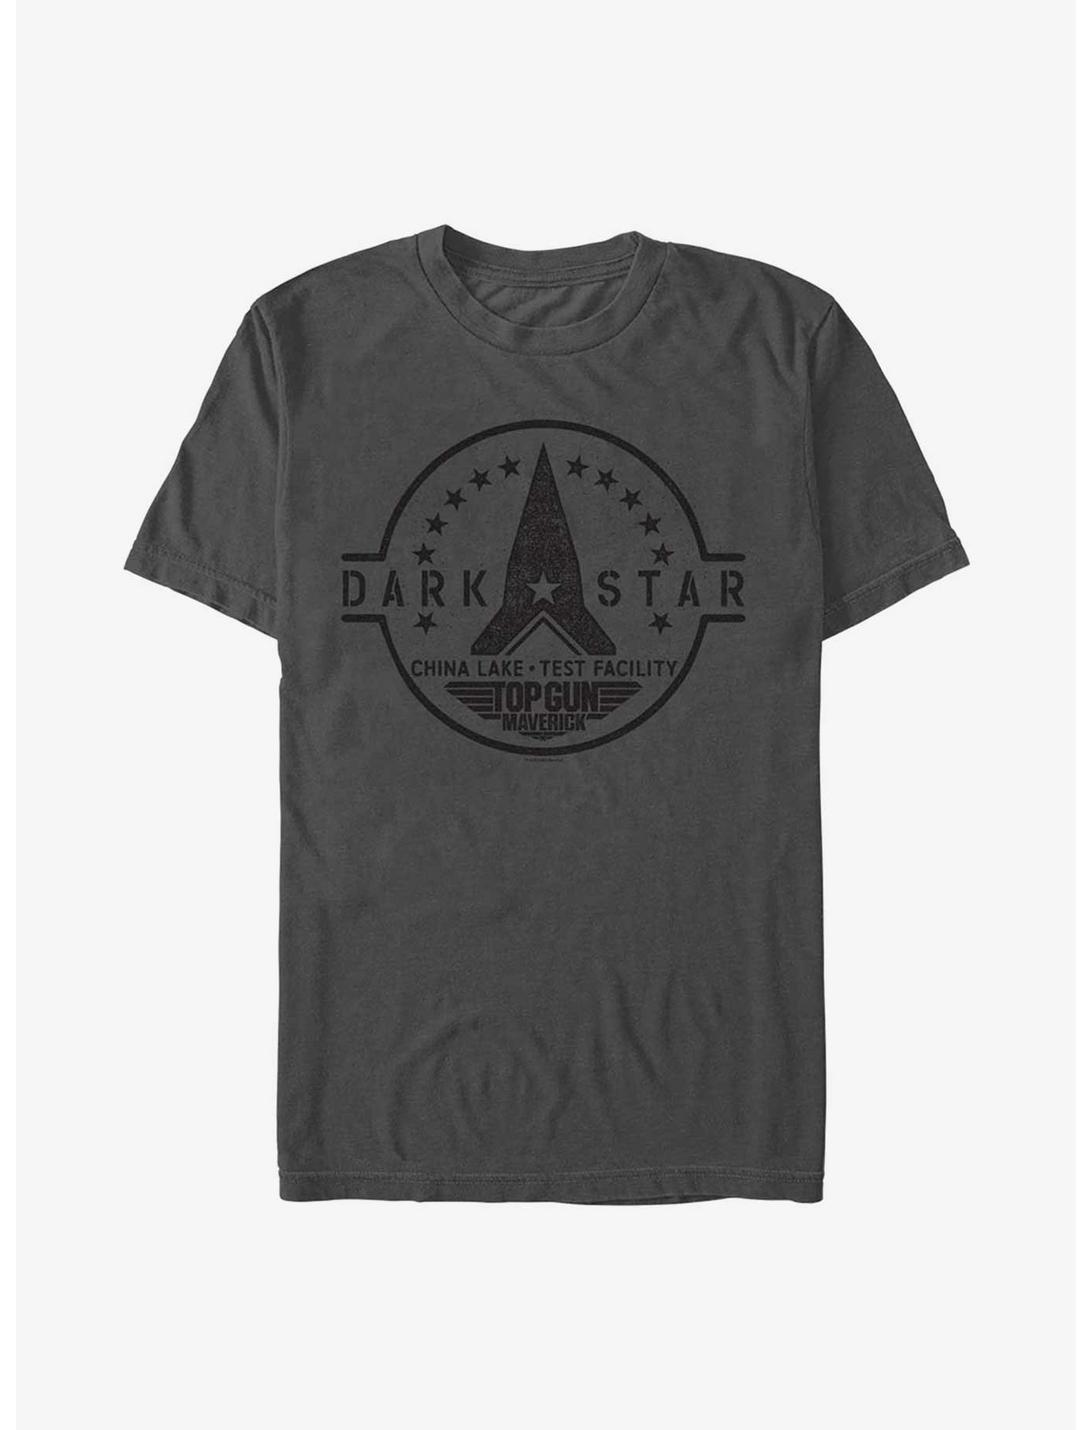 Top Gun Maverick Dark Star T-Shirt, CHARCOAL, hi-res